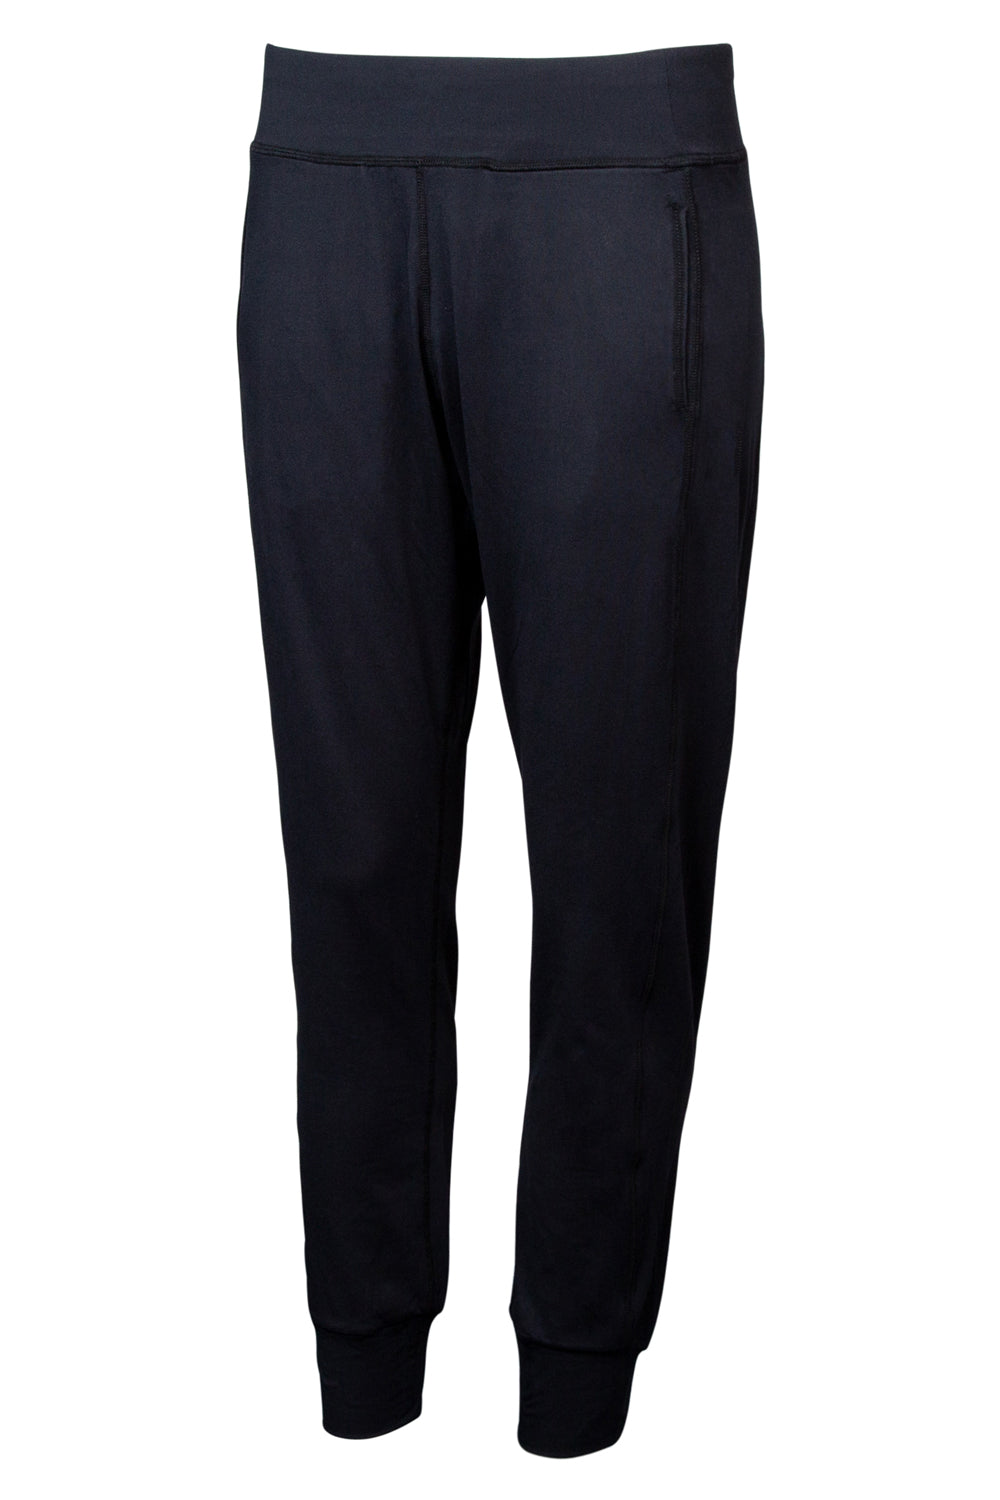 Sundried Women's Yoga Pants Trousers L Black SD0359 L Black Activewear